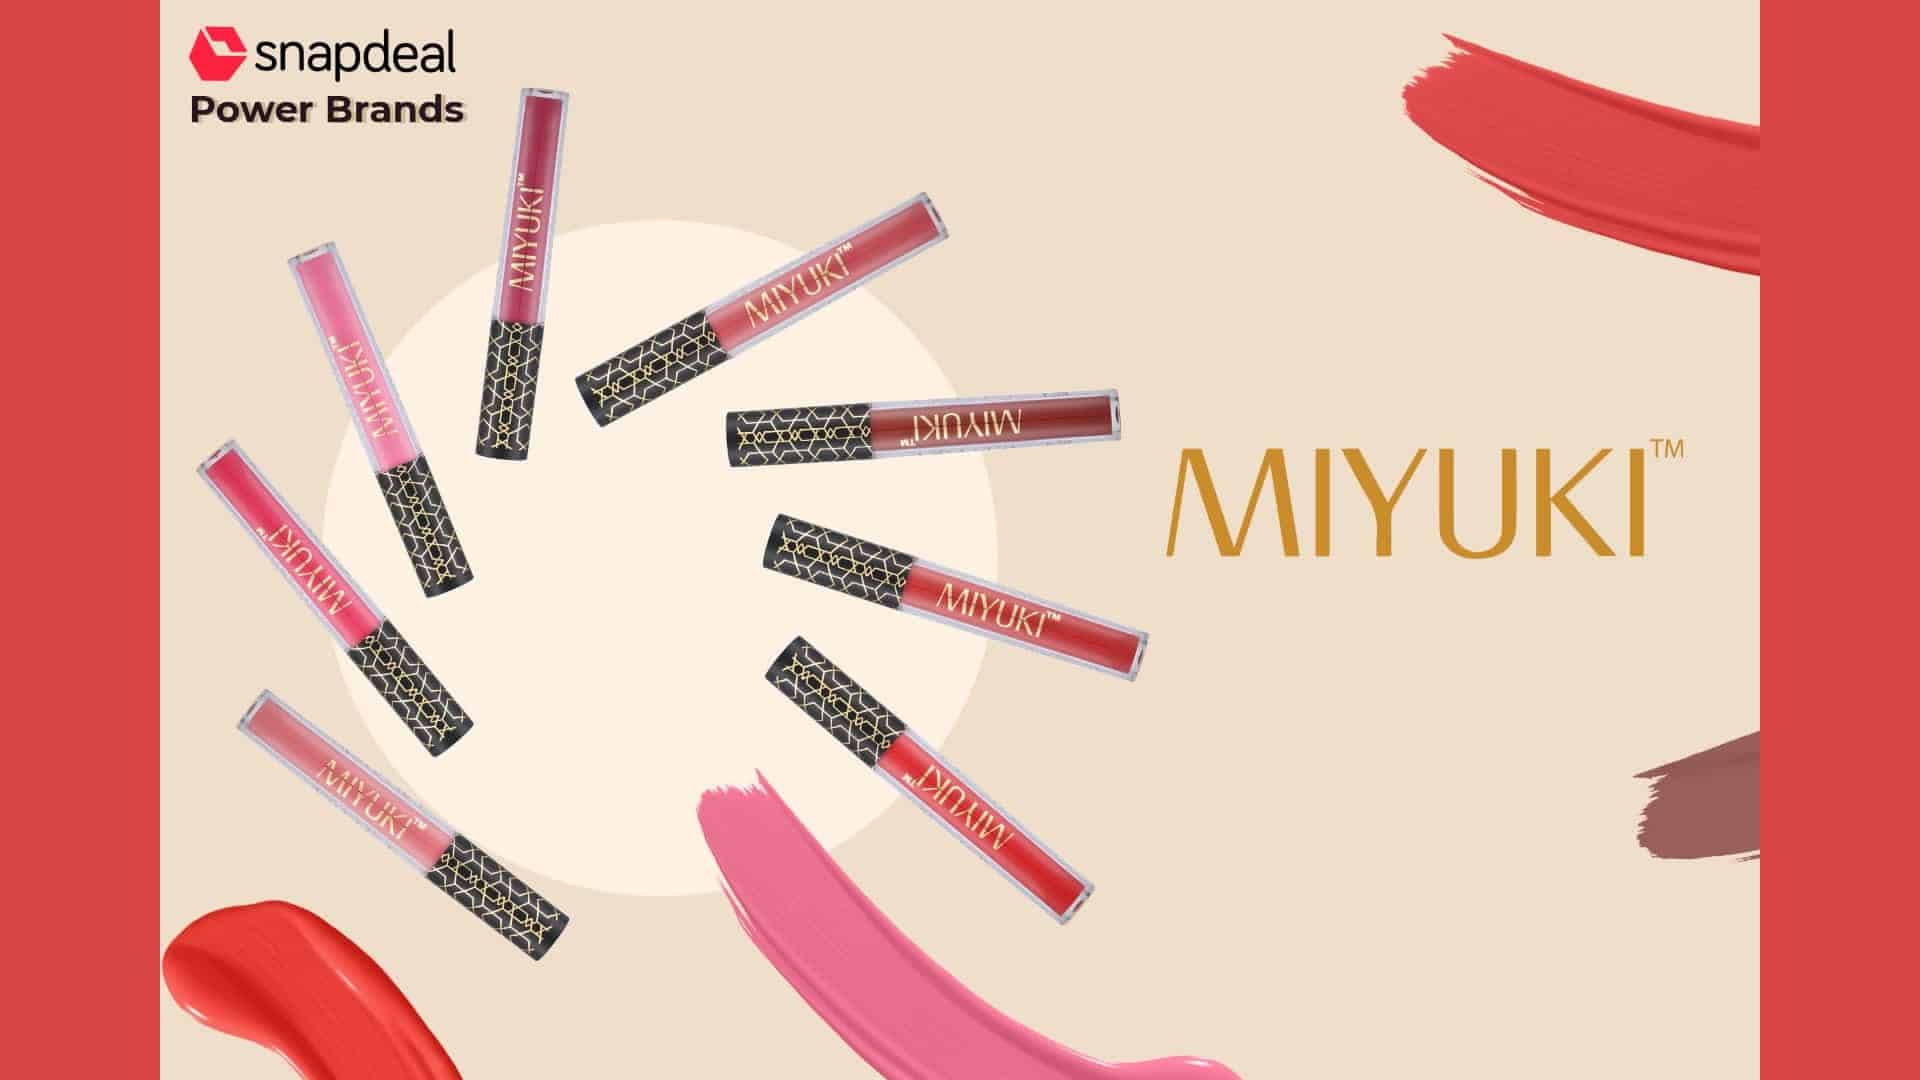 Snapdeal Launches Beauty Brand "Miyuki" under its Power Brands Program